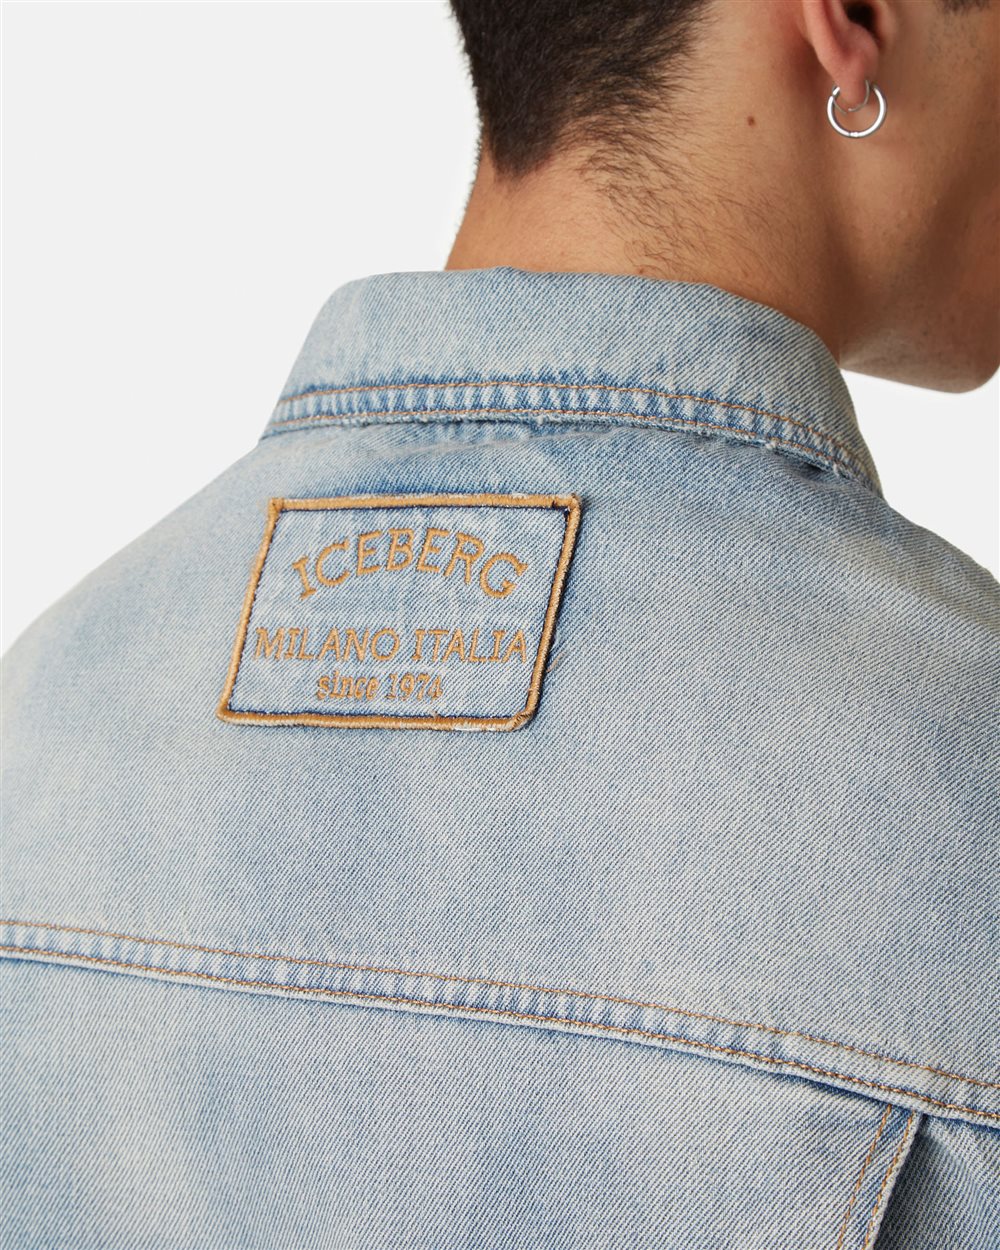 Denim jacket with logo - Iceberg - Official Website